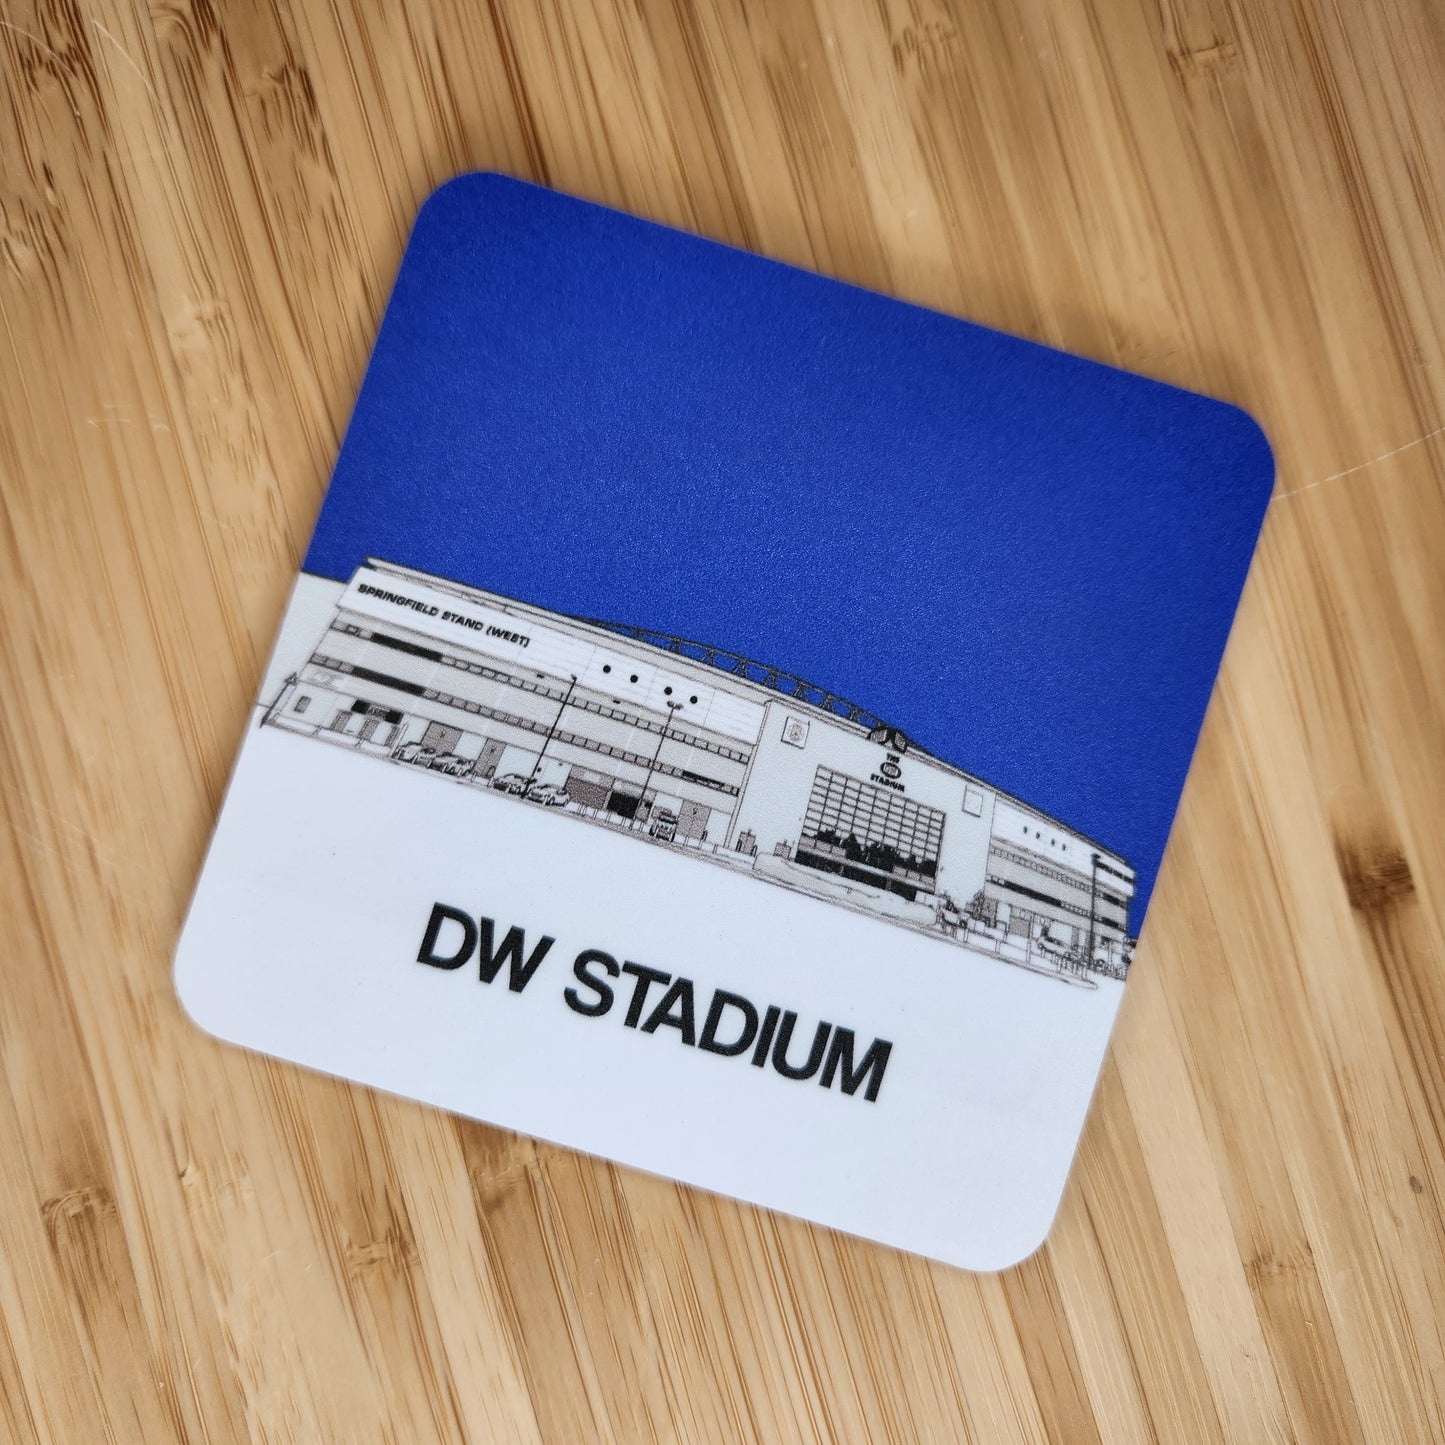 Wigan Athletic FC drinks coaster of DW Stadium